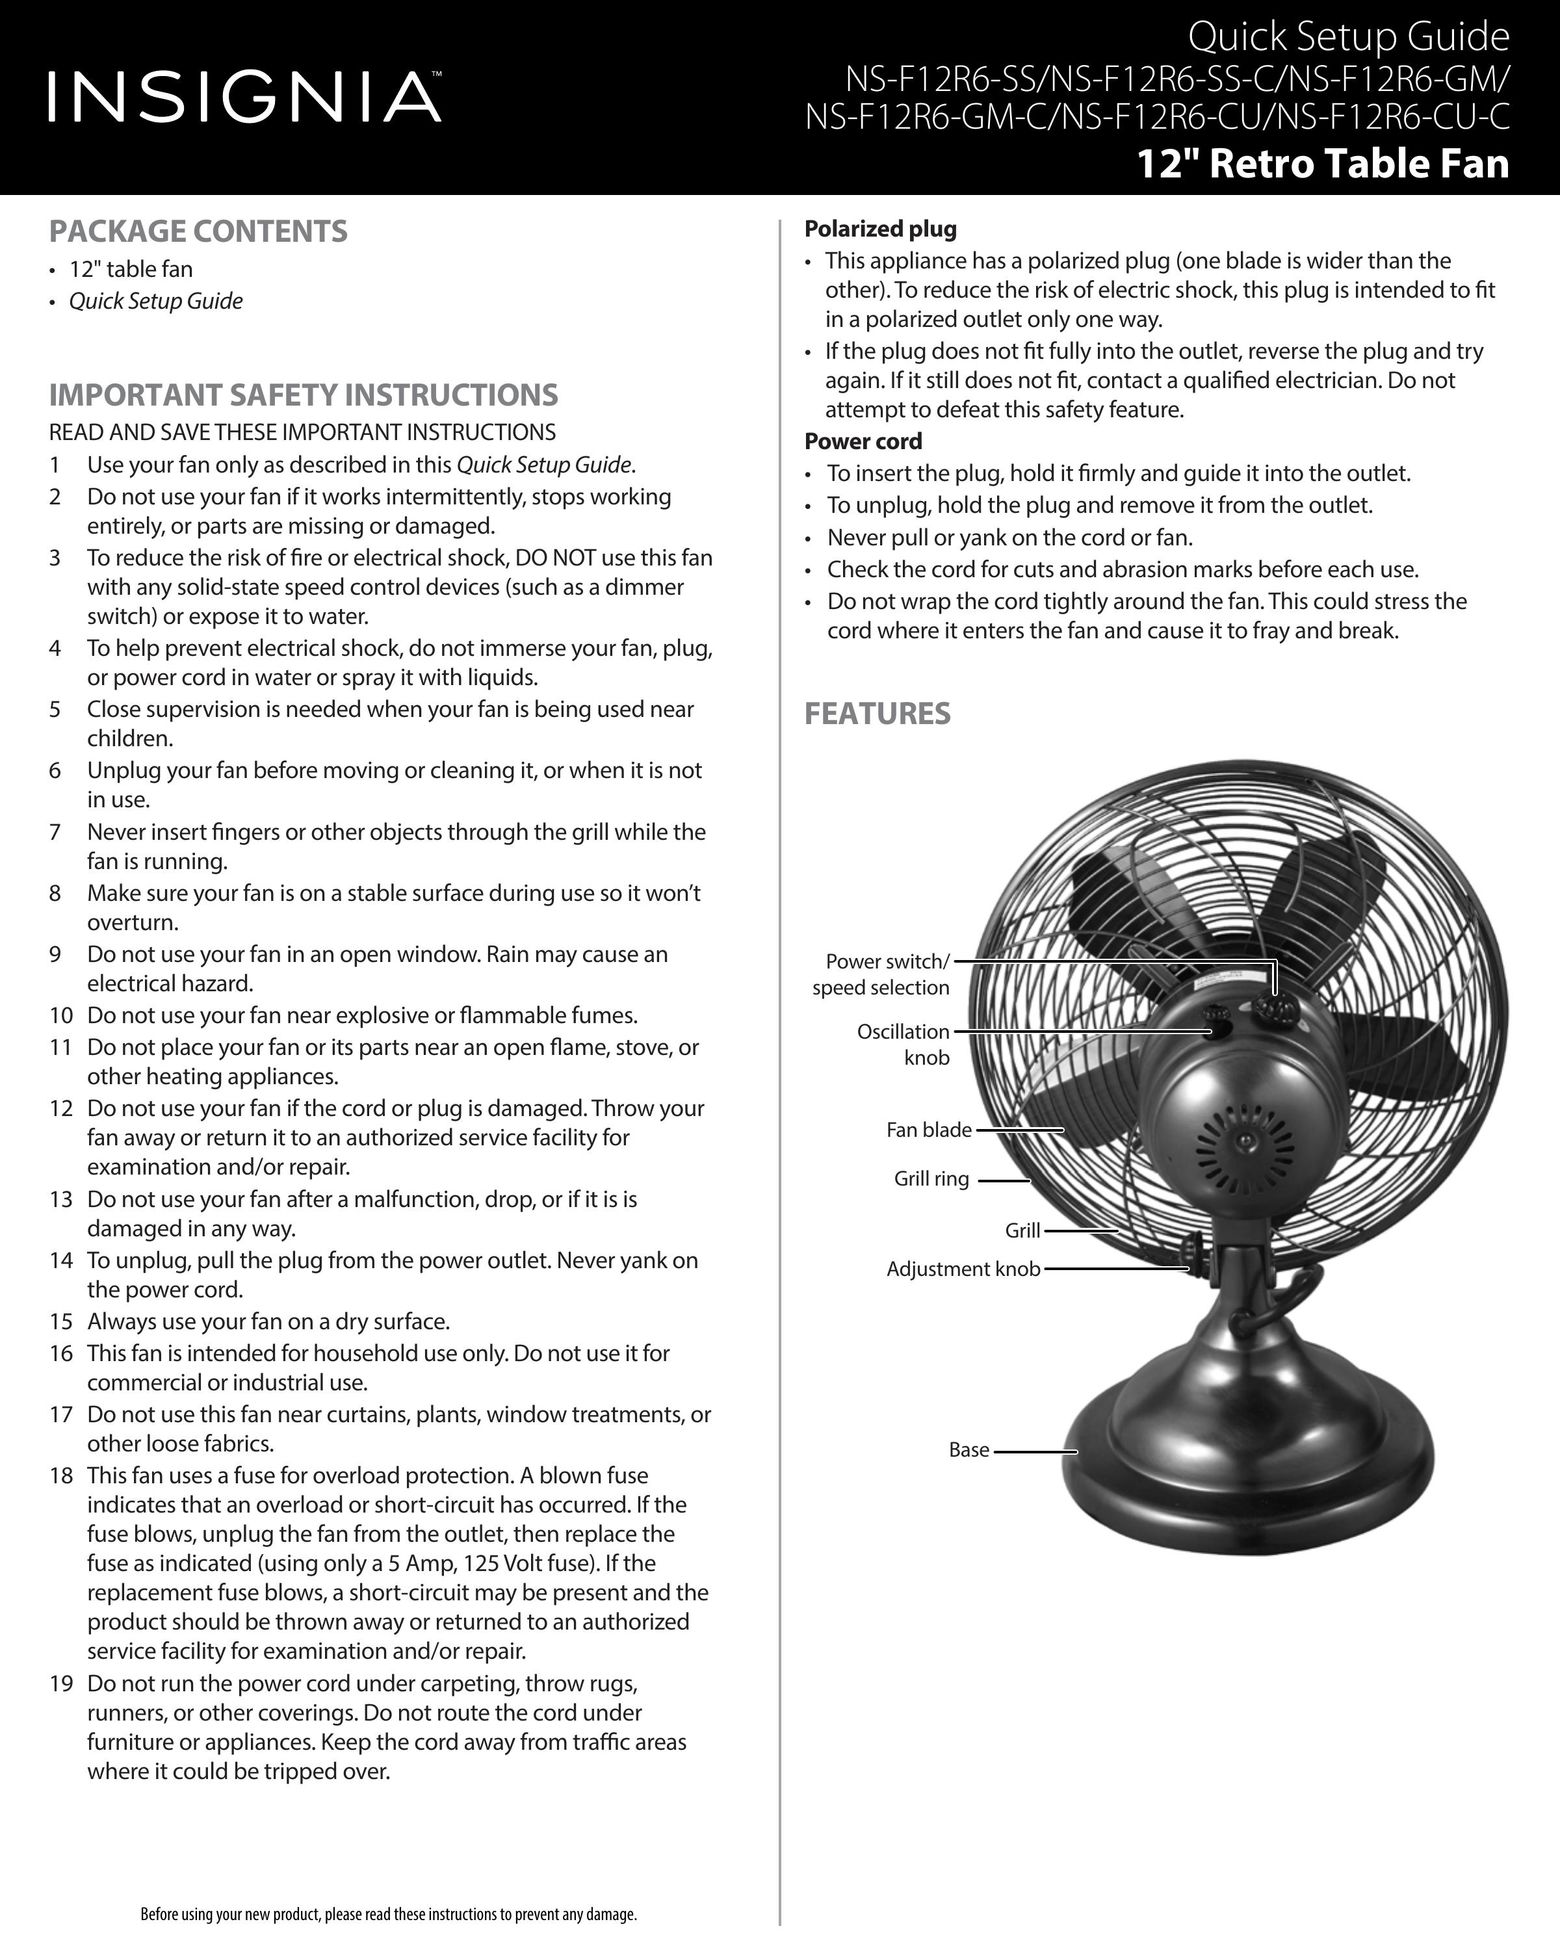 Insignia NS-F12R6-GM-C Fan User Manual